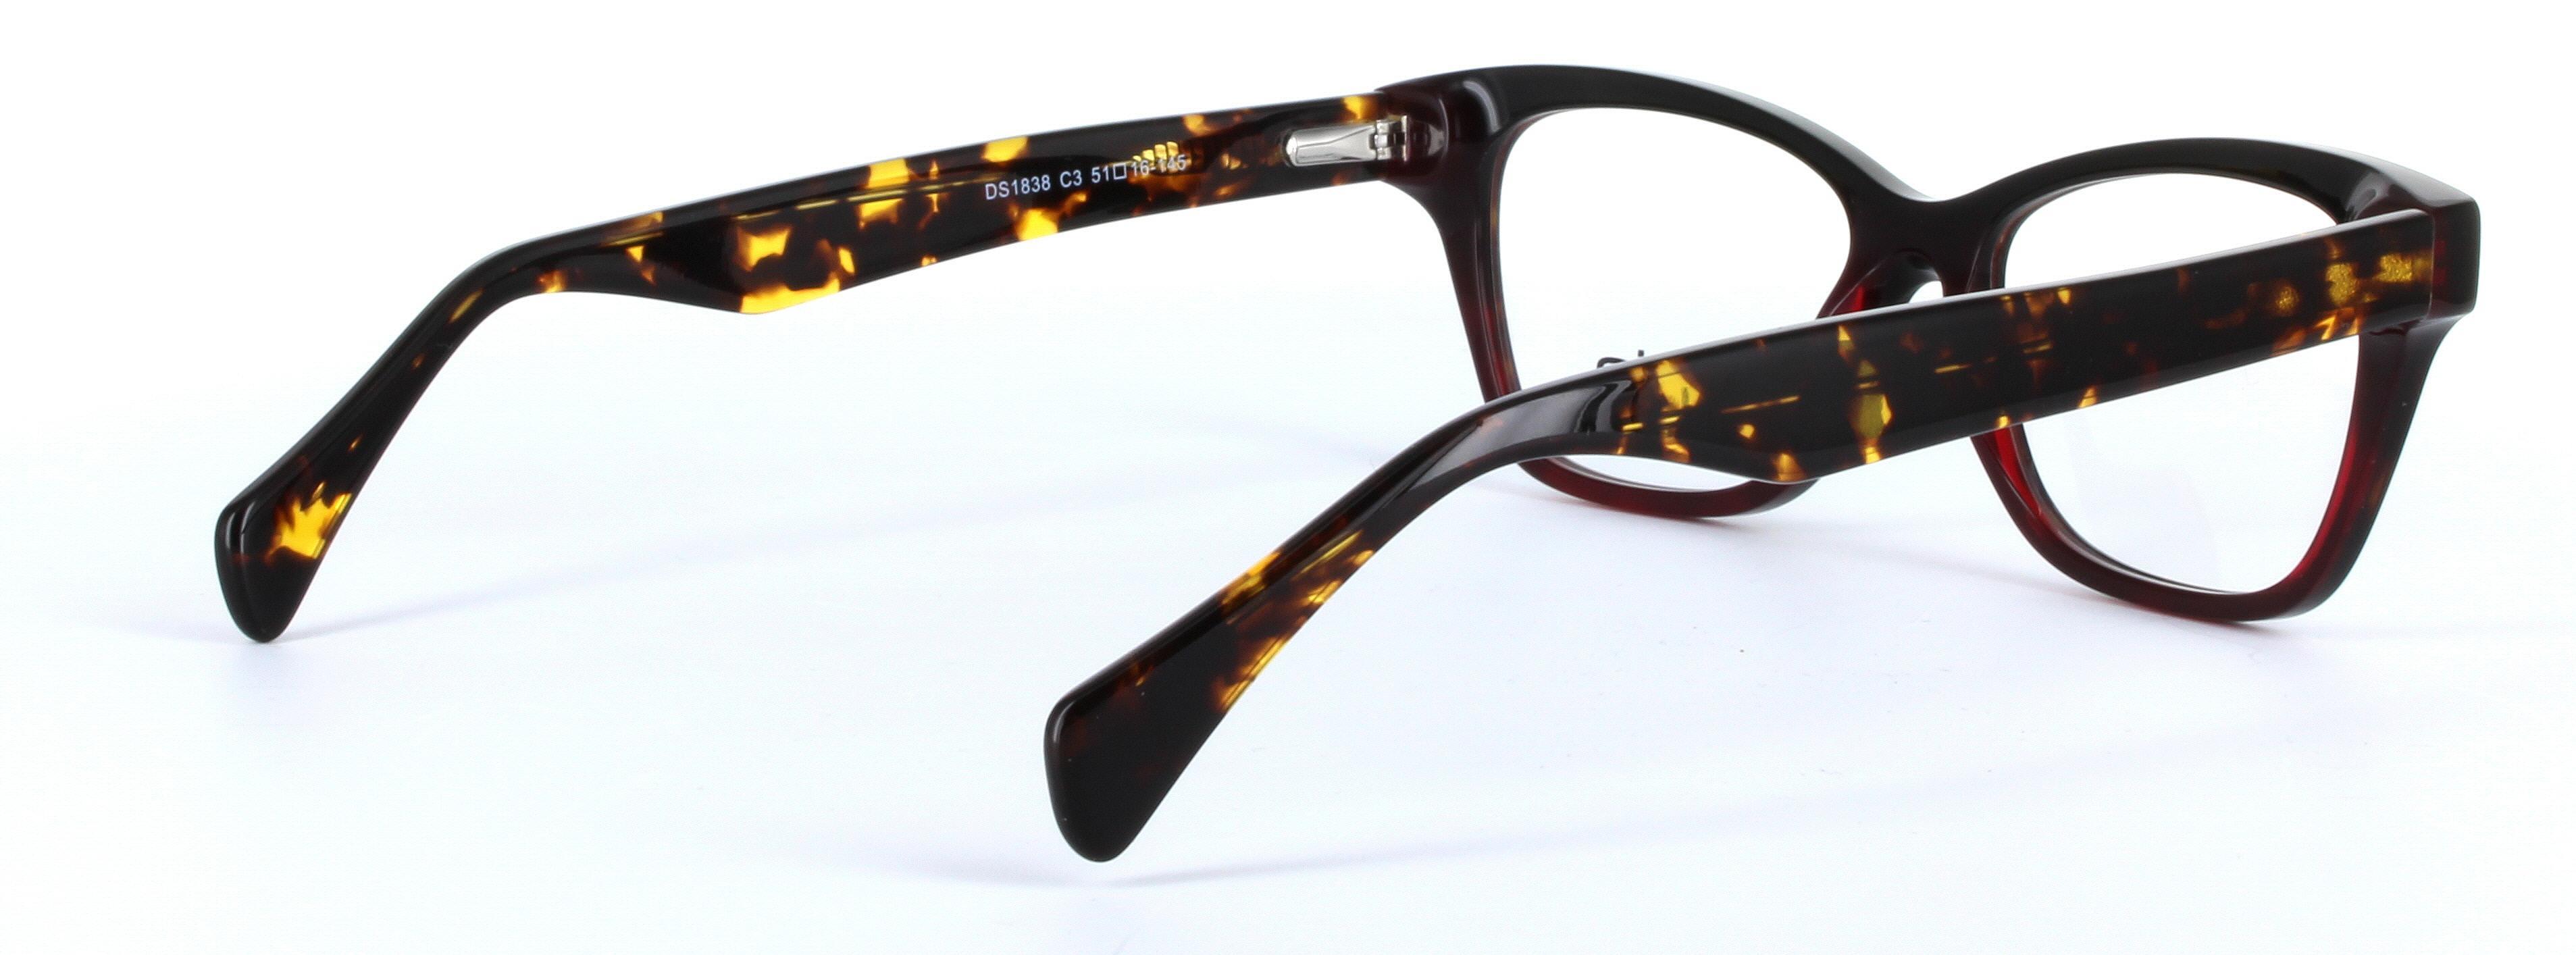 Felia Burgundy Full Rim Oval Round Plastic Glasses - Image View 4